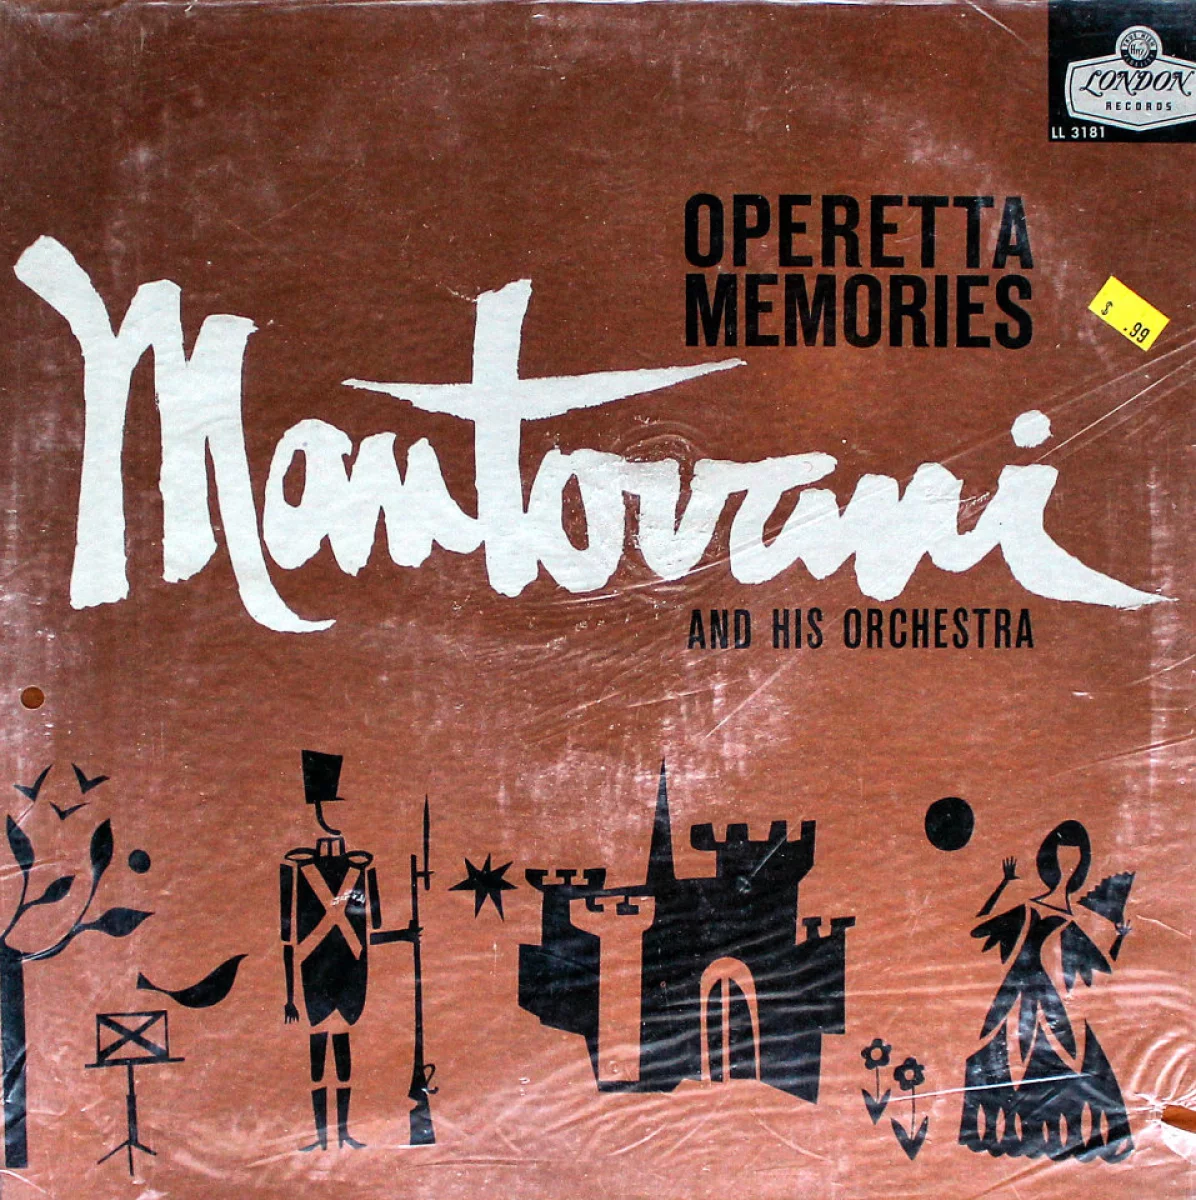 Mantovani u0026 His Orchestra Vinyl 12